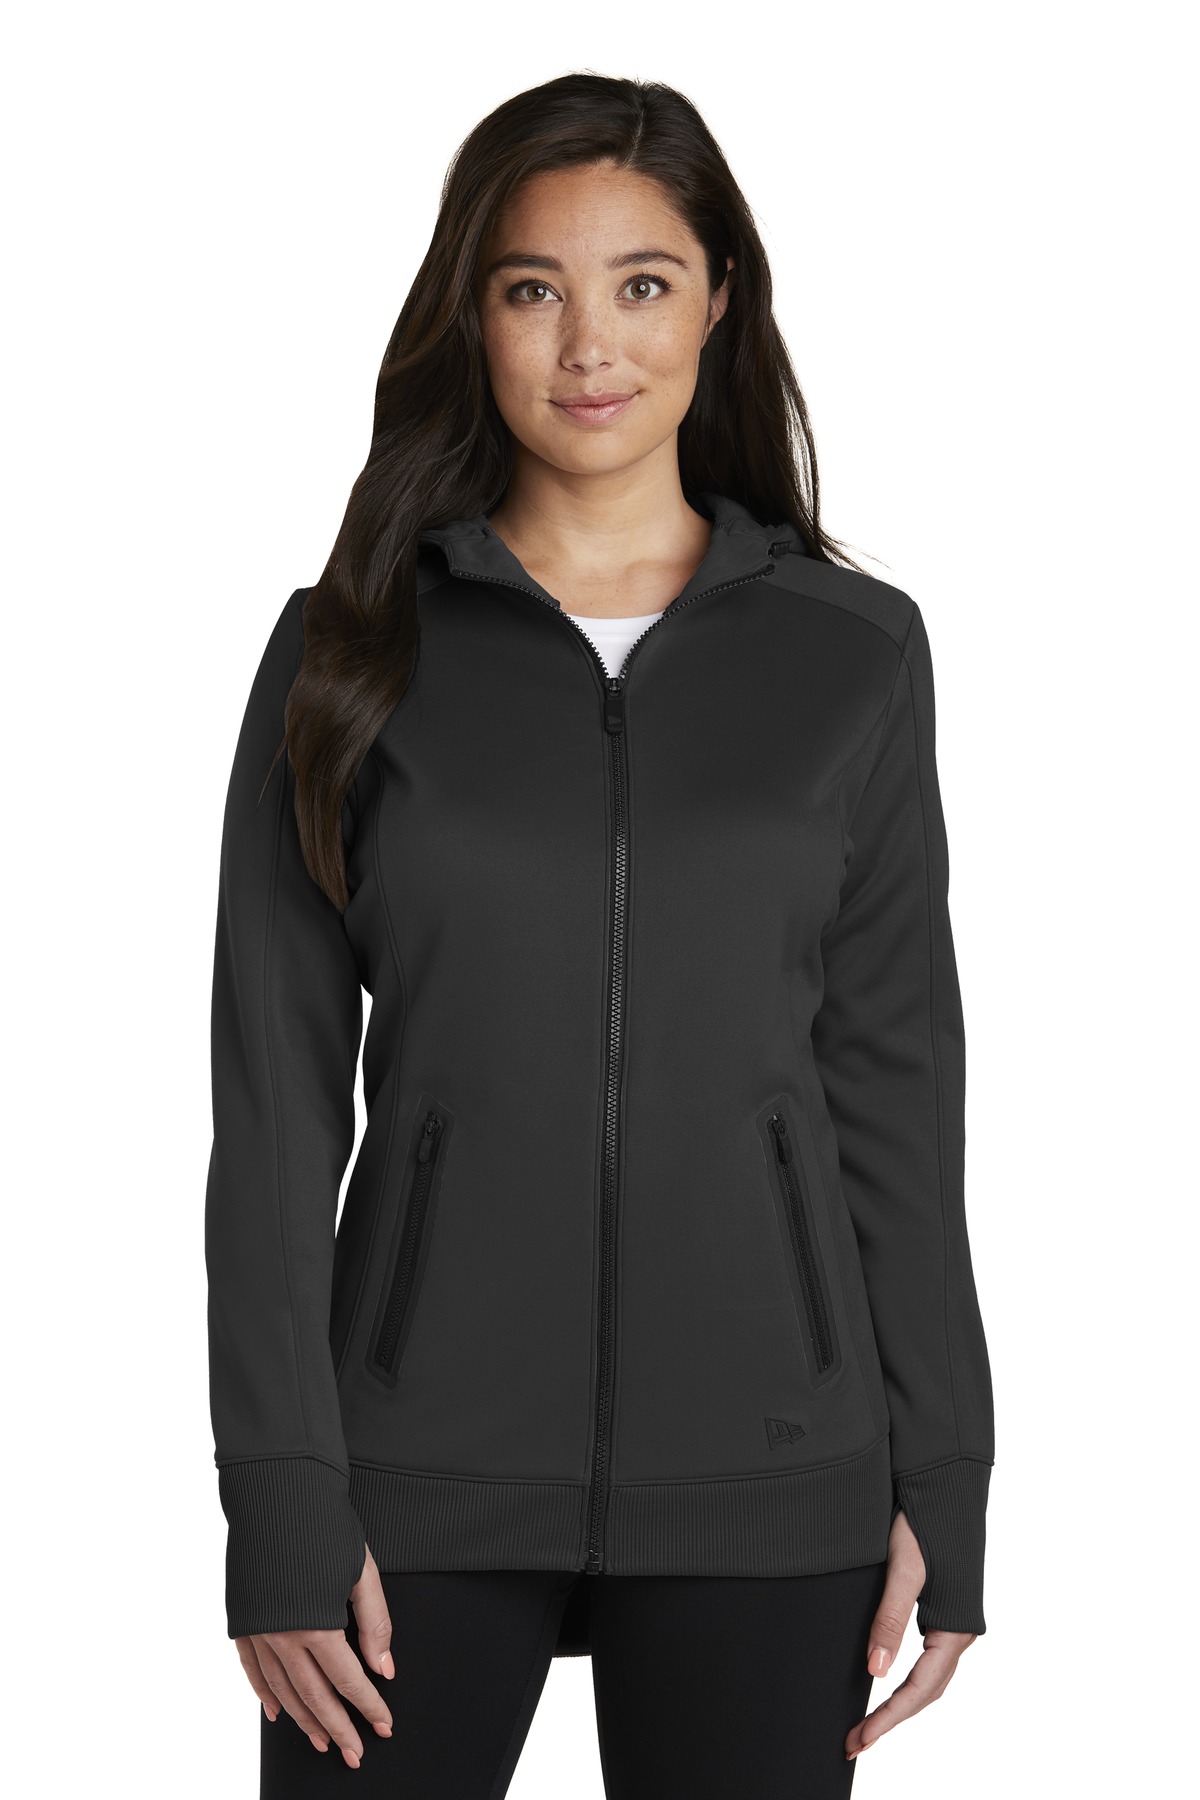 New Era ® Ladies Venue Fleece Full-Zip Hoodie. LNEA522 - Custom Shirt Shop